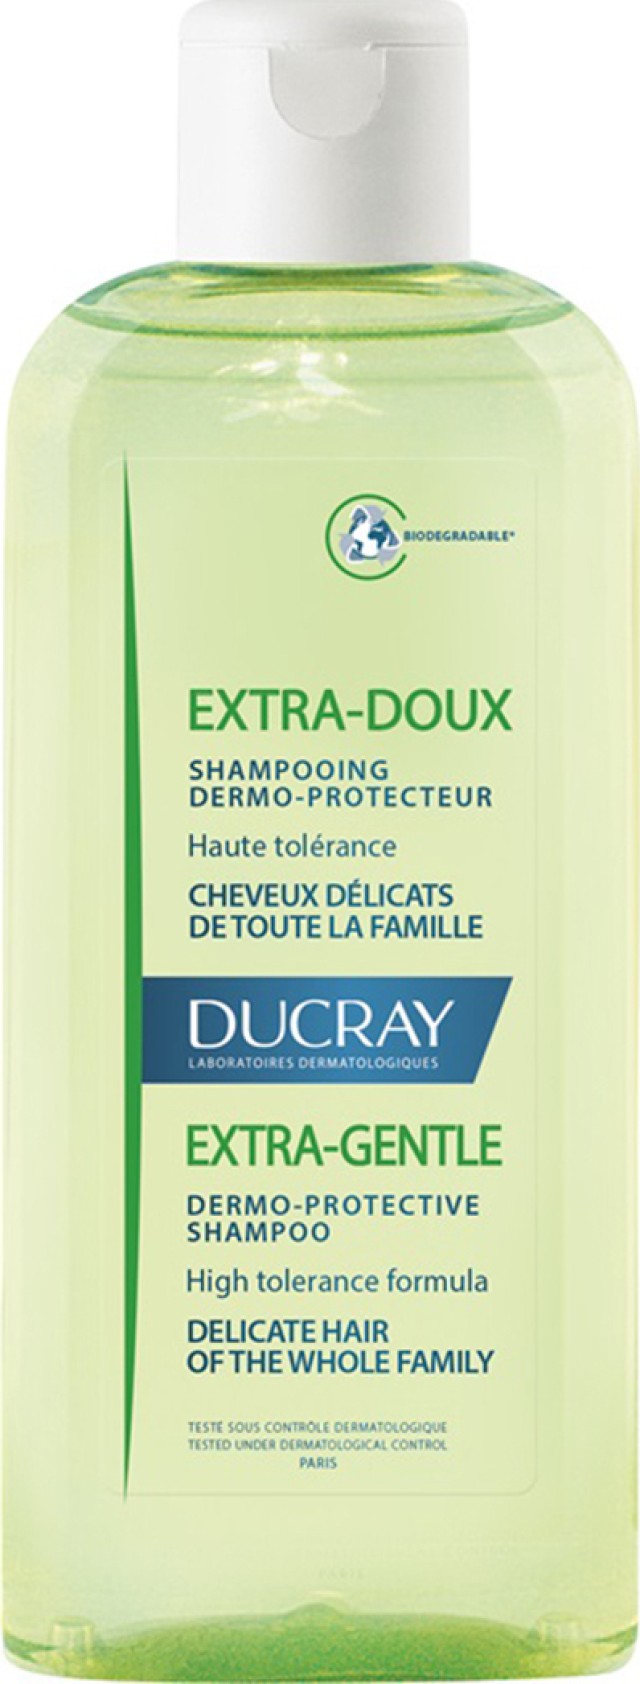 Ducray Extra-Gentle Dermo-Protective Shampoo for Delicate Hair Απαλό Σαμπουάν Για Συχνό Λούσιμο (Κανονικά - Εύθραστα Μαλλιά), 200ml